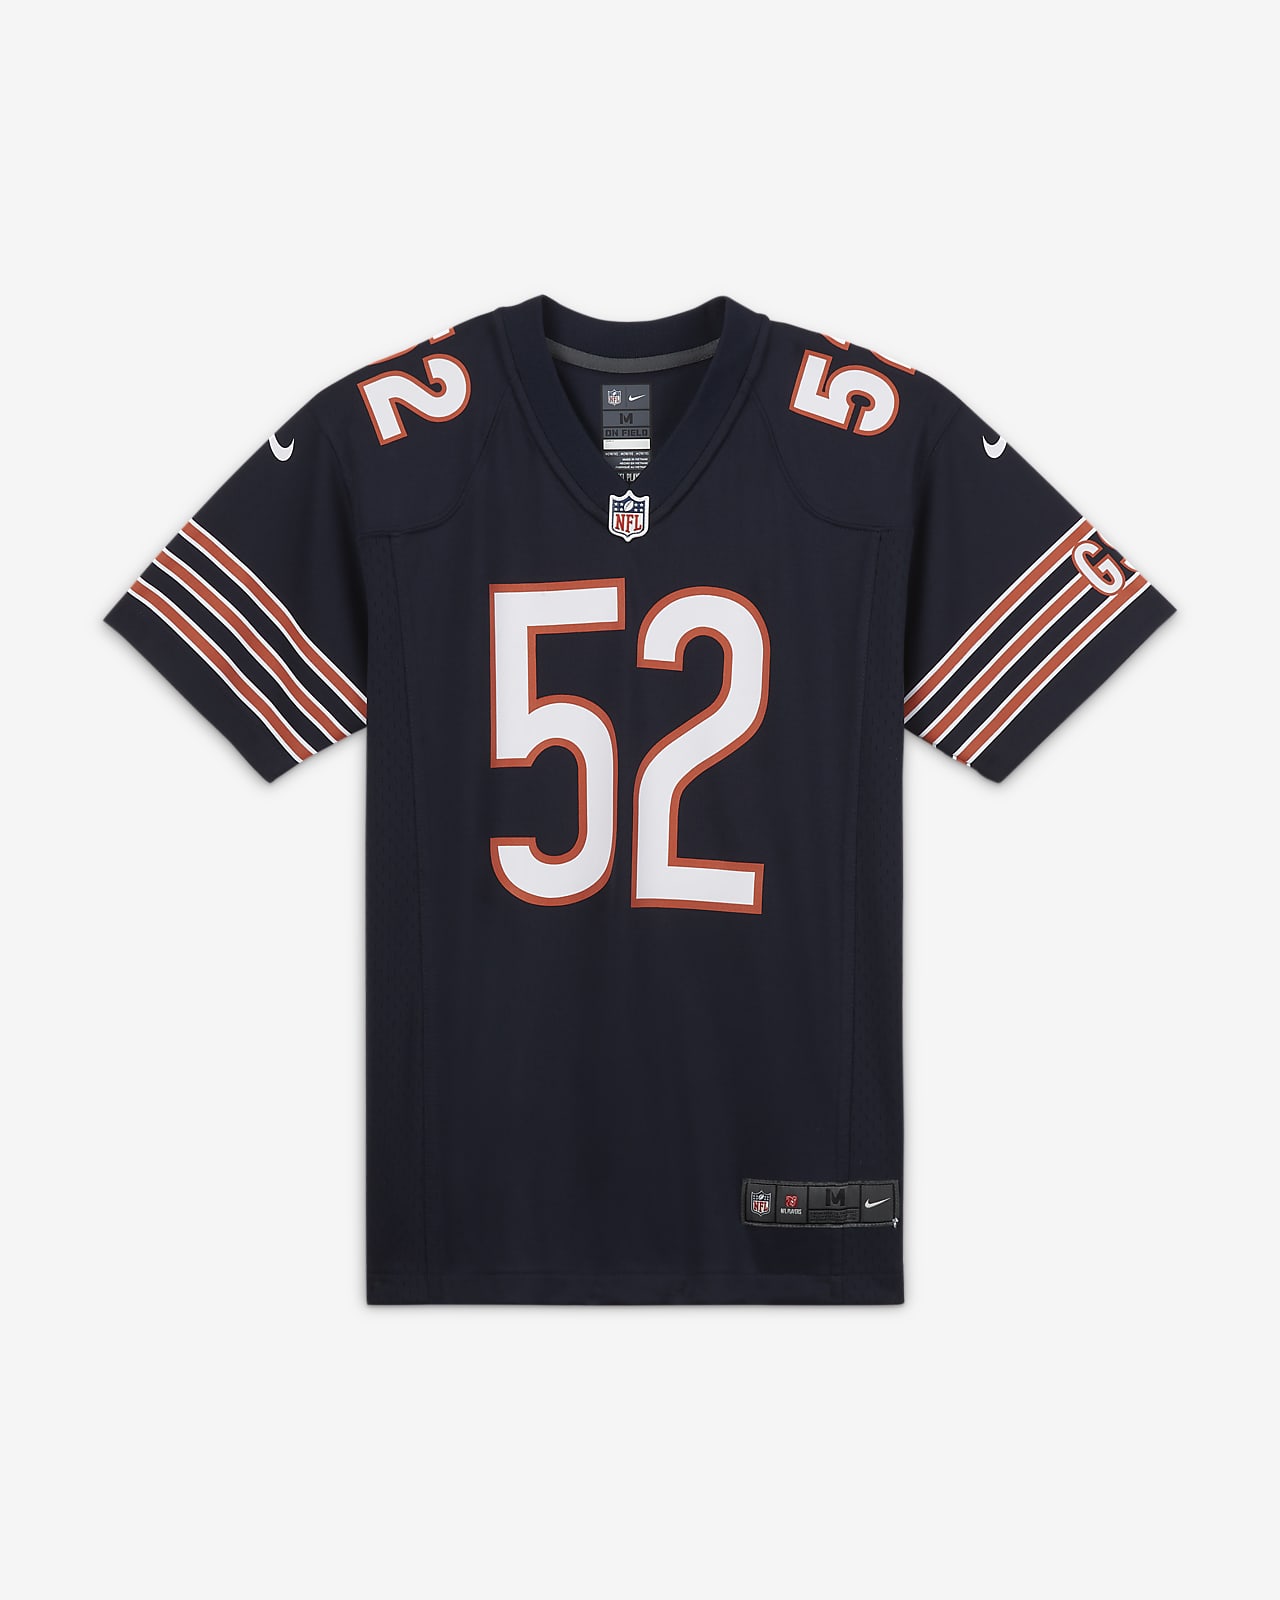 Maillot de football américain NFL Chicago Bears (Khalil Mack) pour ado